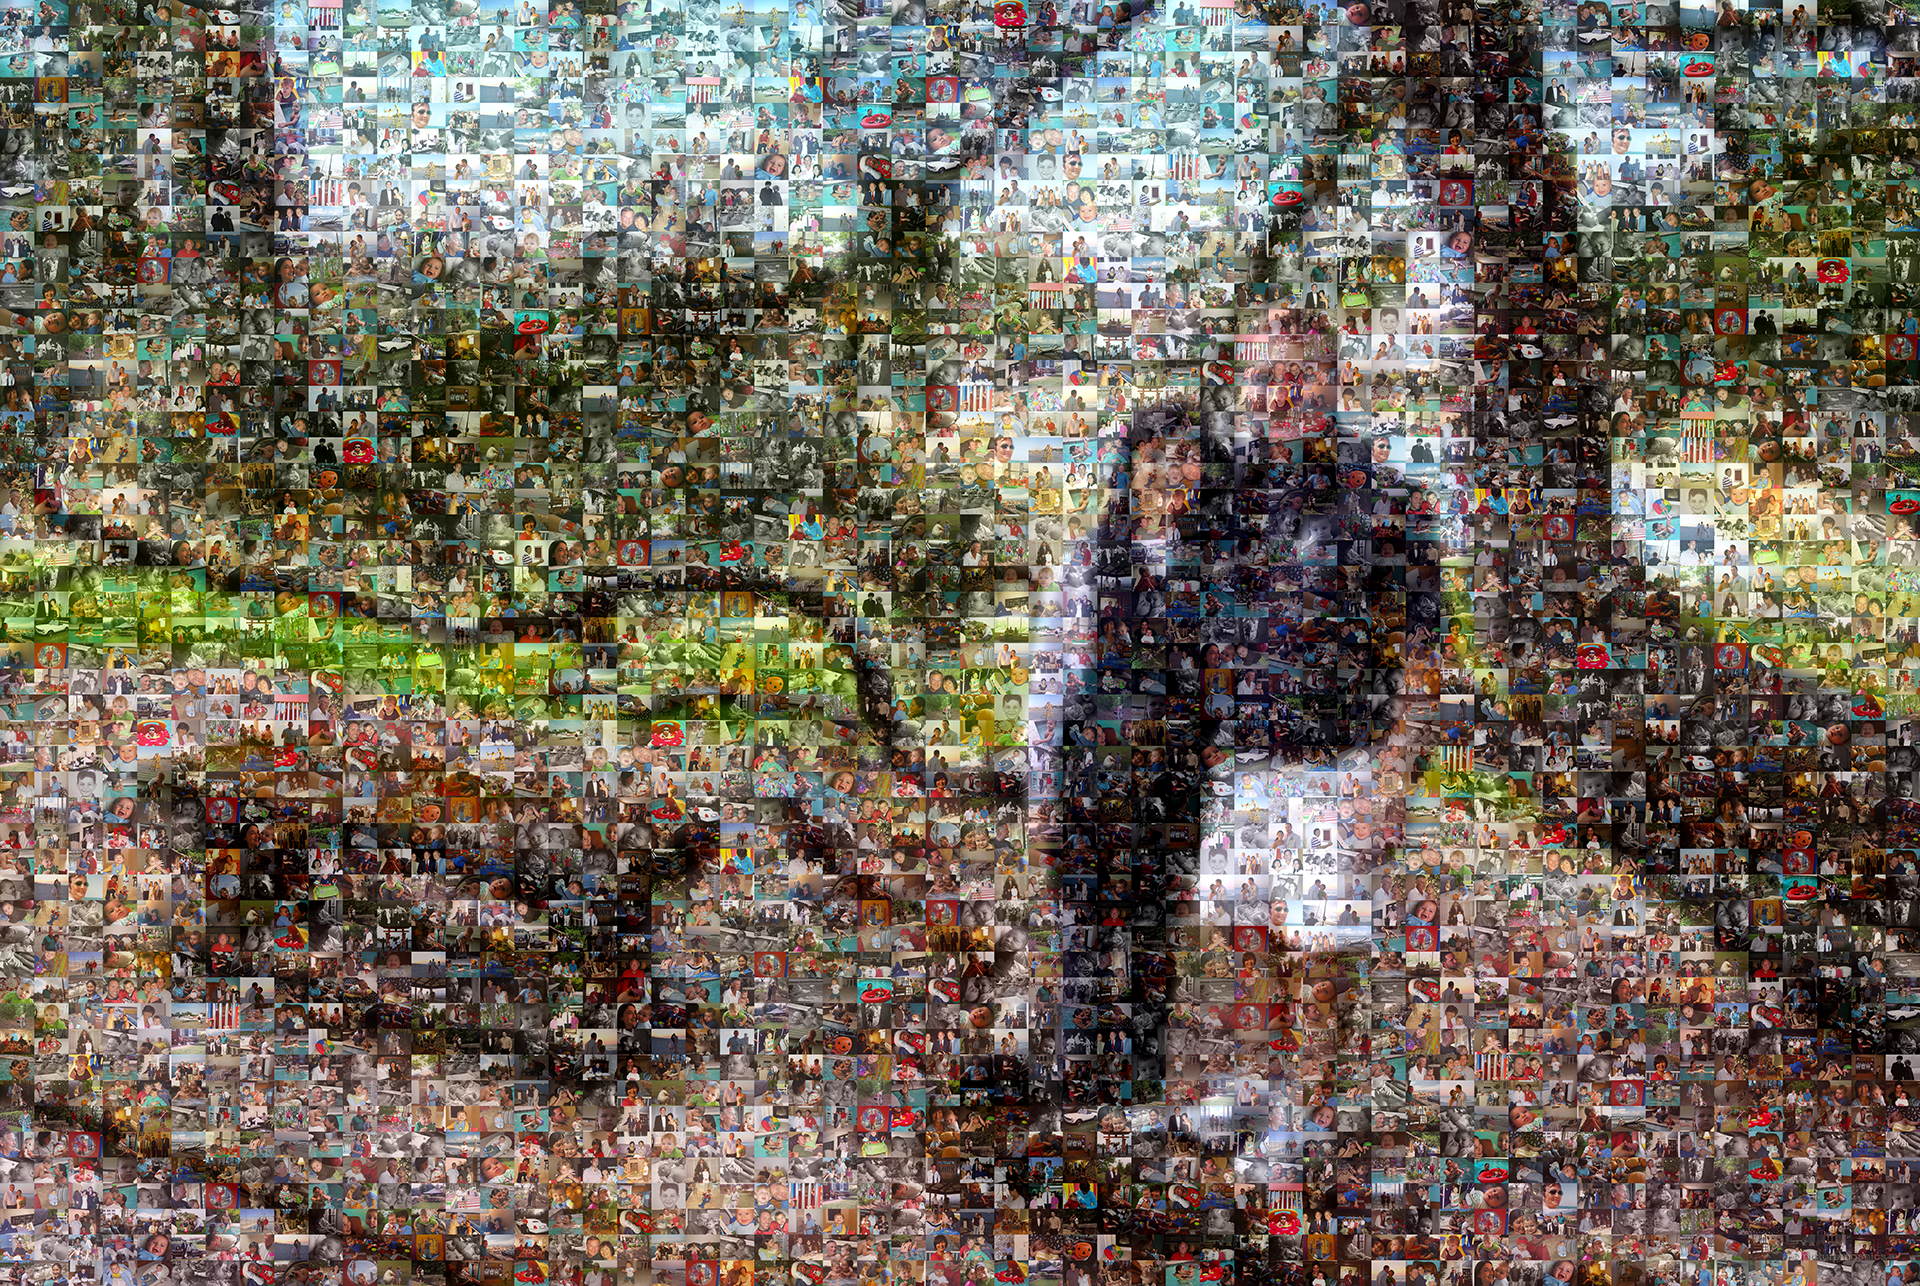 photo mosaic created using 326 customer selected photos